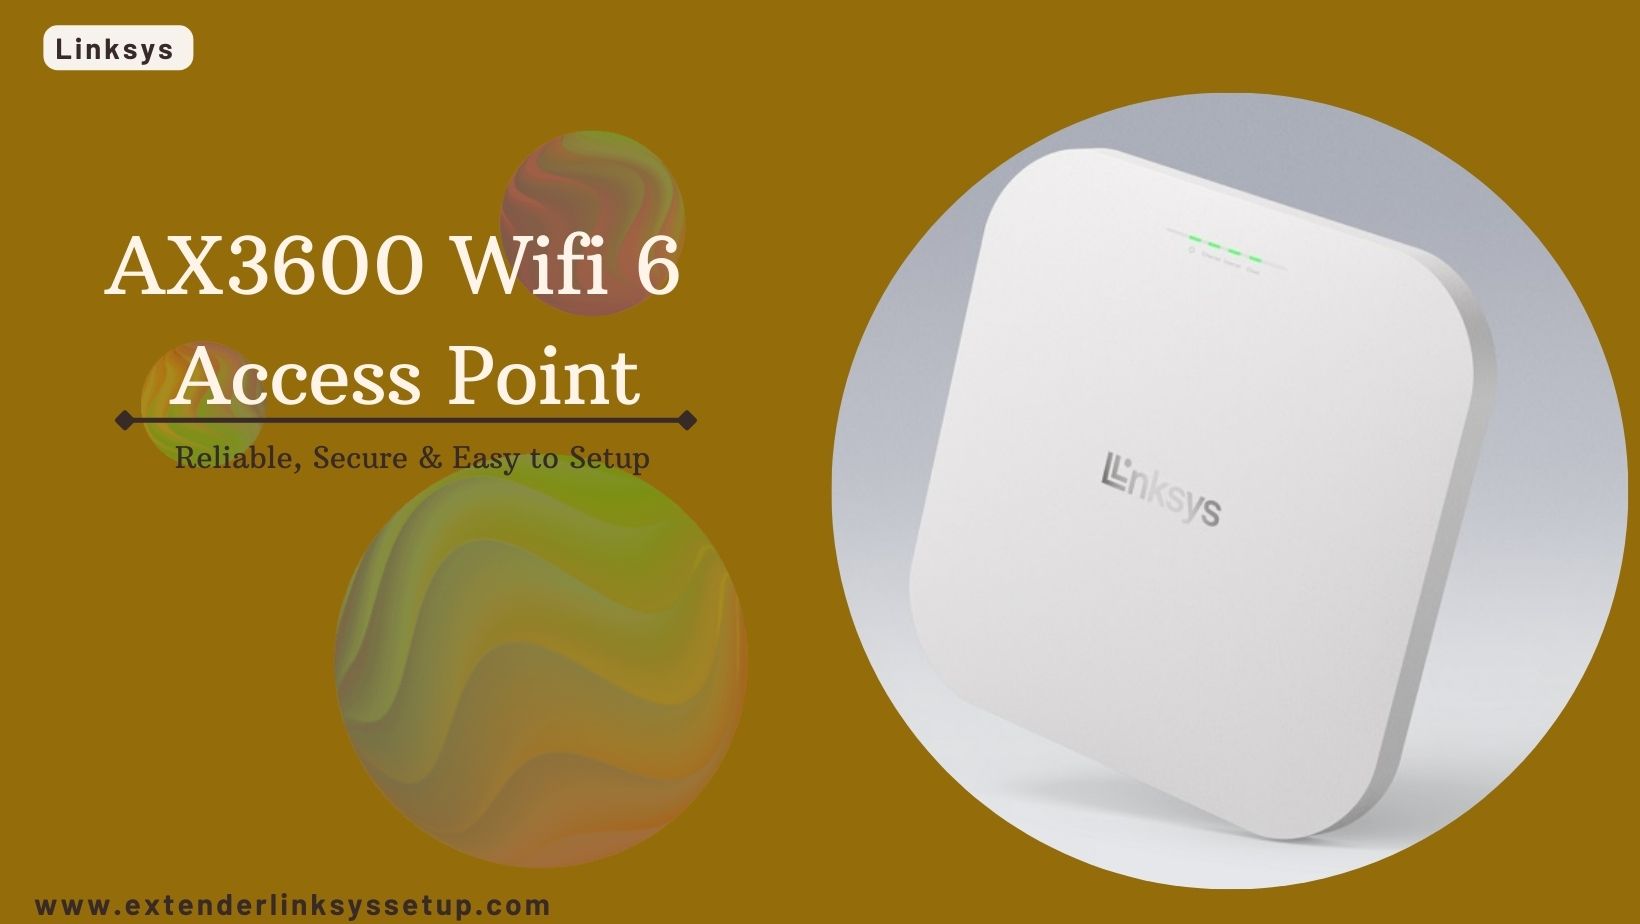 Linksys AX3600 Wifi 6 Access Point